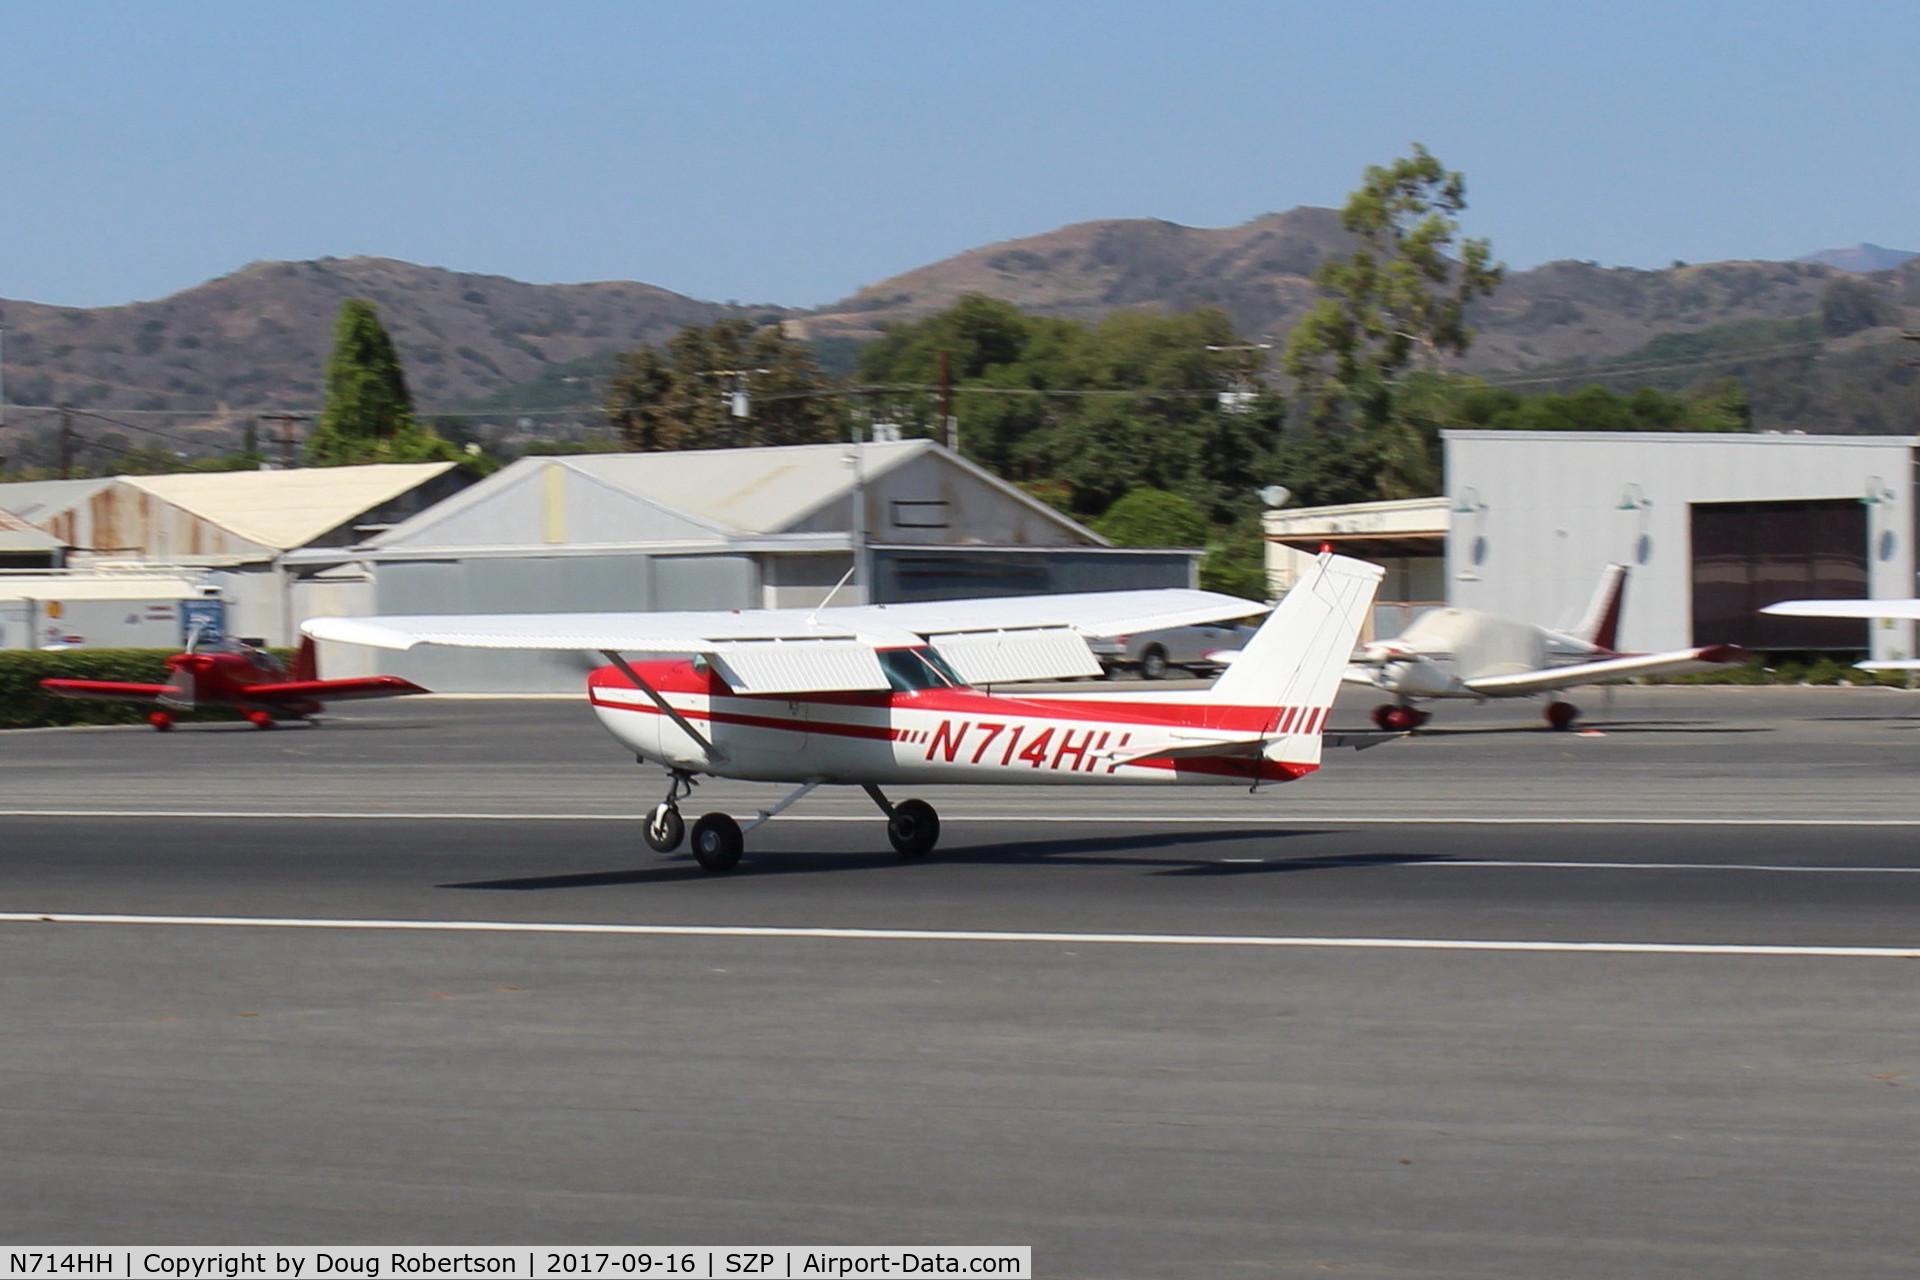 N714HH, 1977 Cessna 150M C/N 15079185, 1977 Cessna 150M, Continental O-200 100 Hp, landing roll Rwy 22